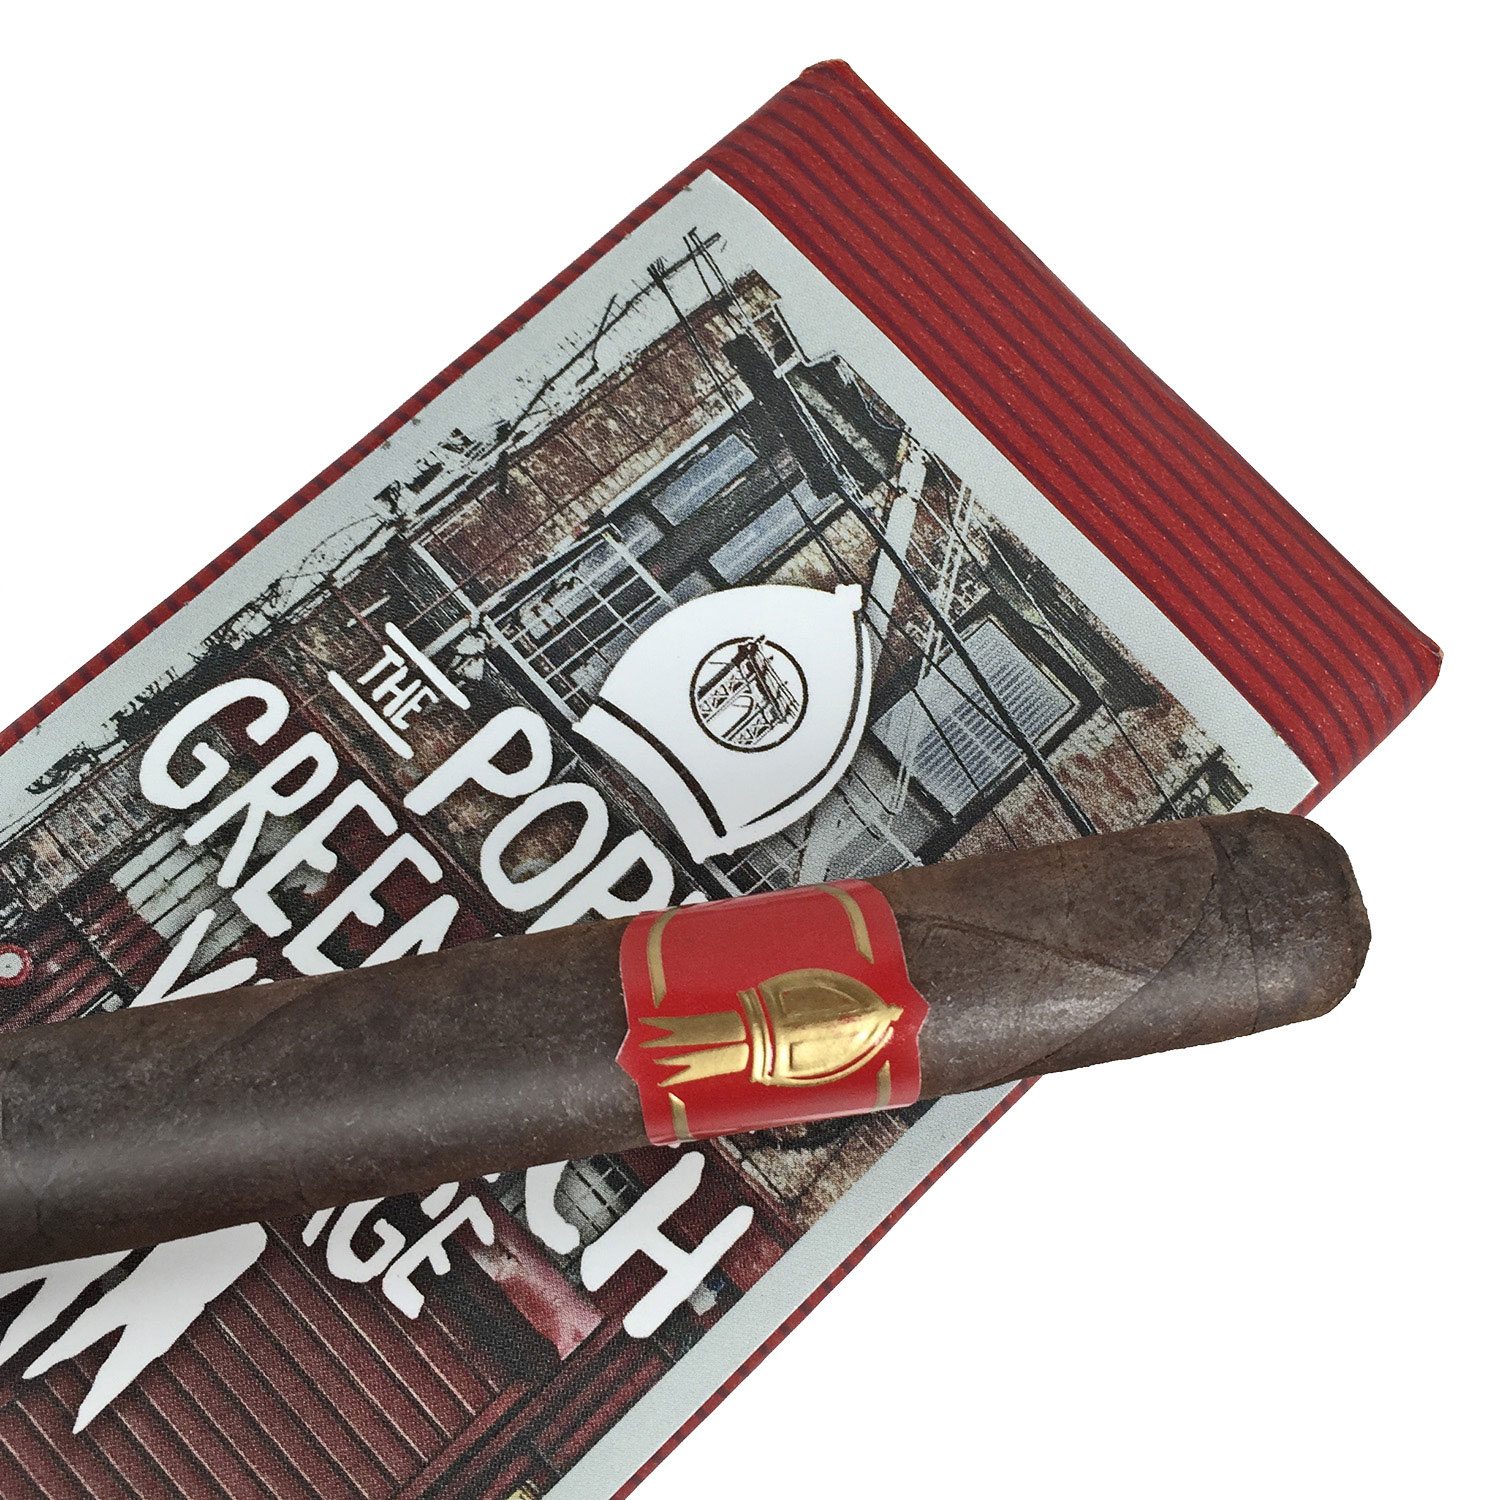 Cigar News: Drew Estate Announces “Pope of Greenwich Village” Cigar As Part of Smoke Inn Microblend Series